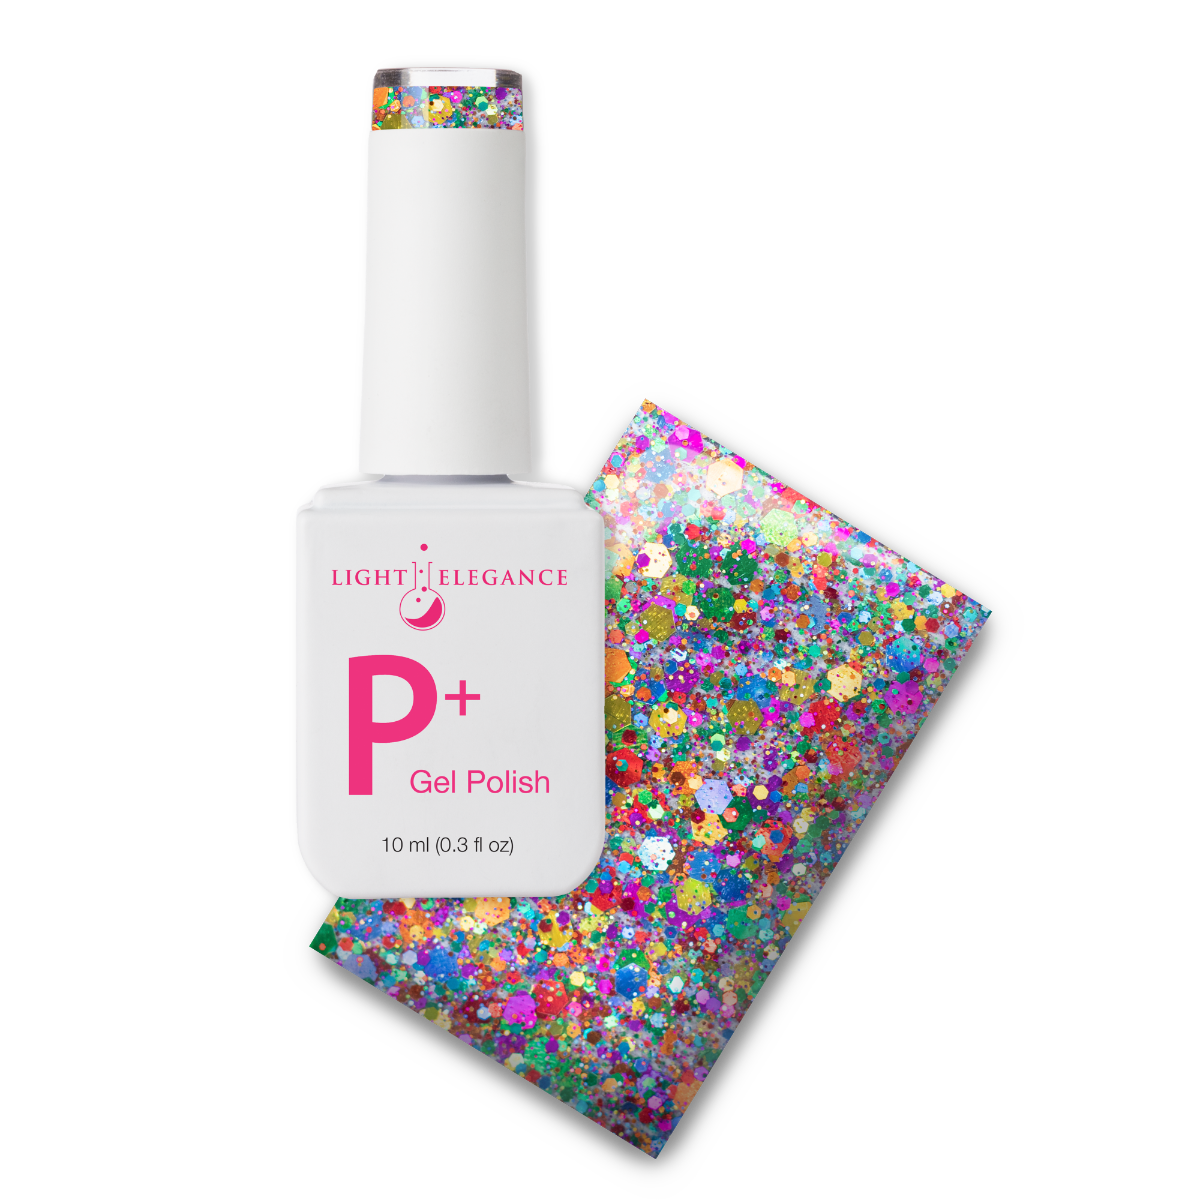 Light Elegance P+ Soak Off Glitter Gel - Everyone's a Critic :: New Packaging